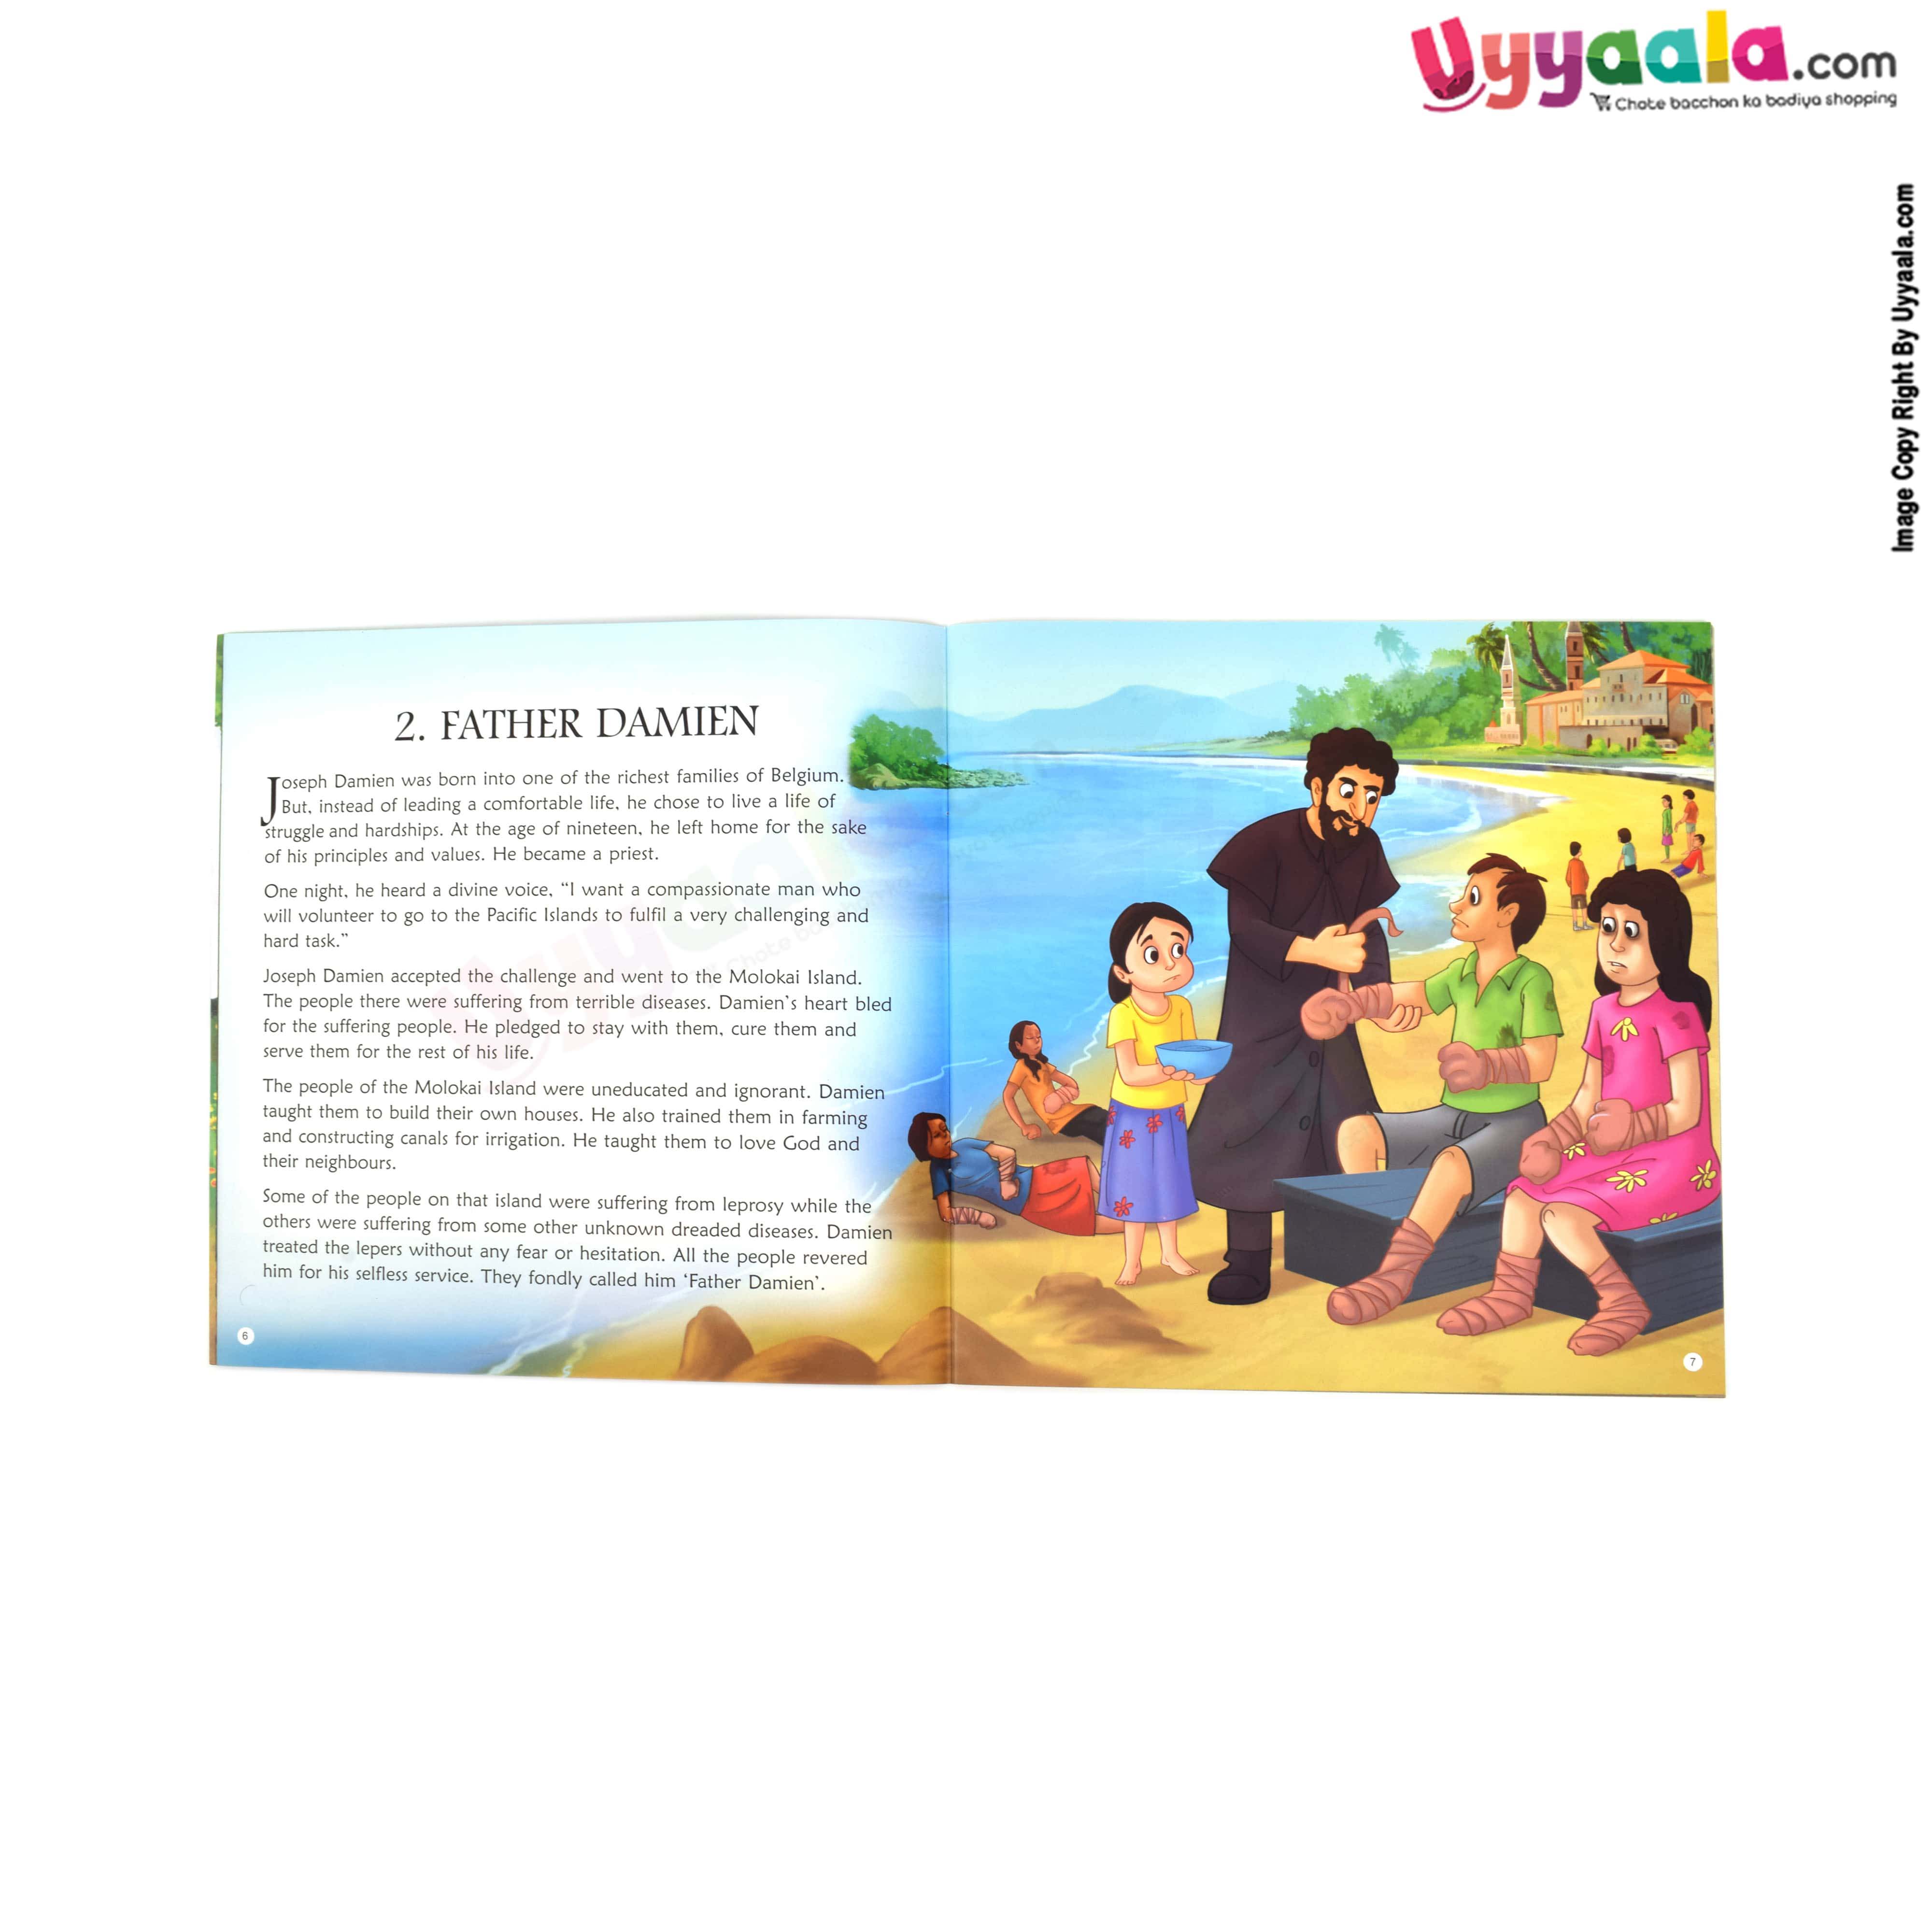 NAVNEET moral tales inspirational stories for children, moral stories pack of 4